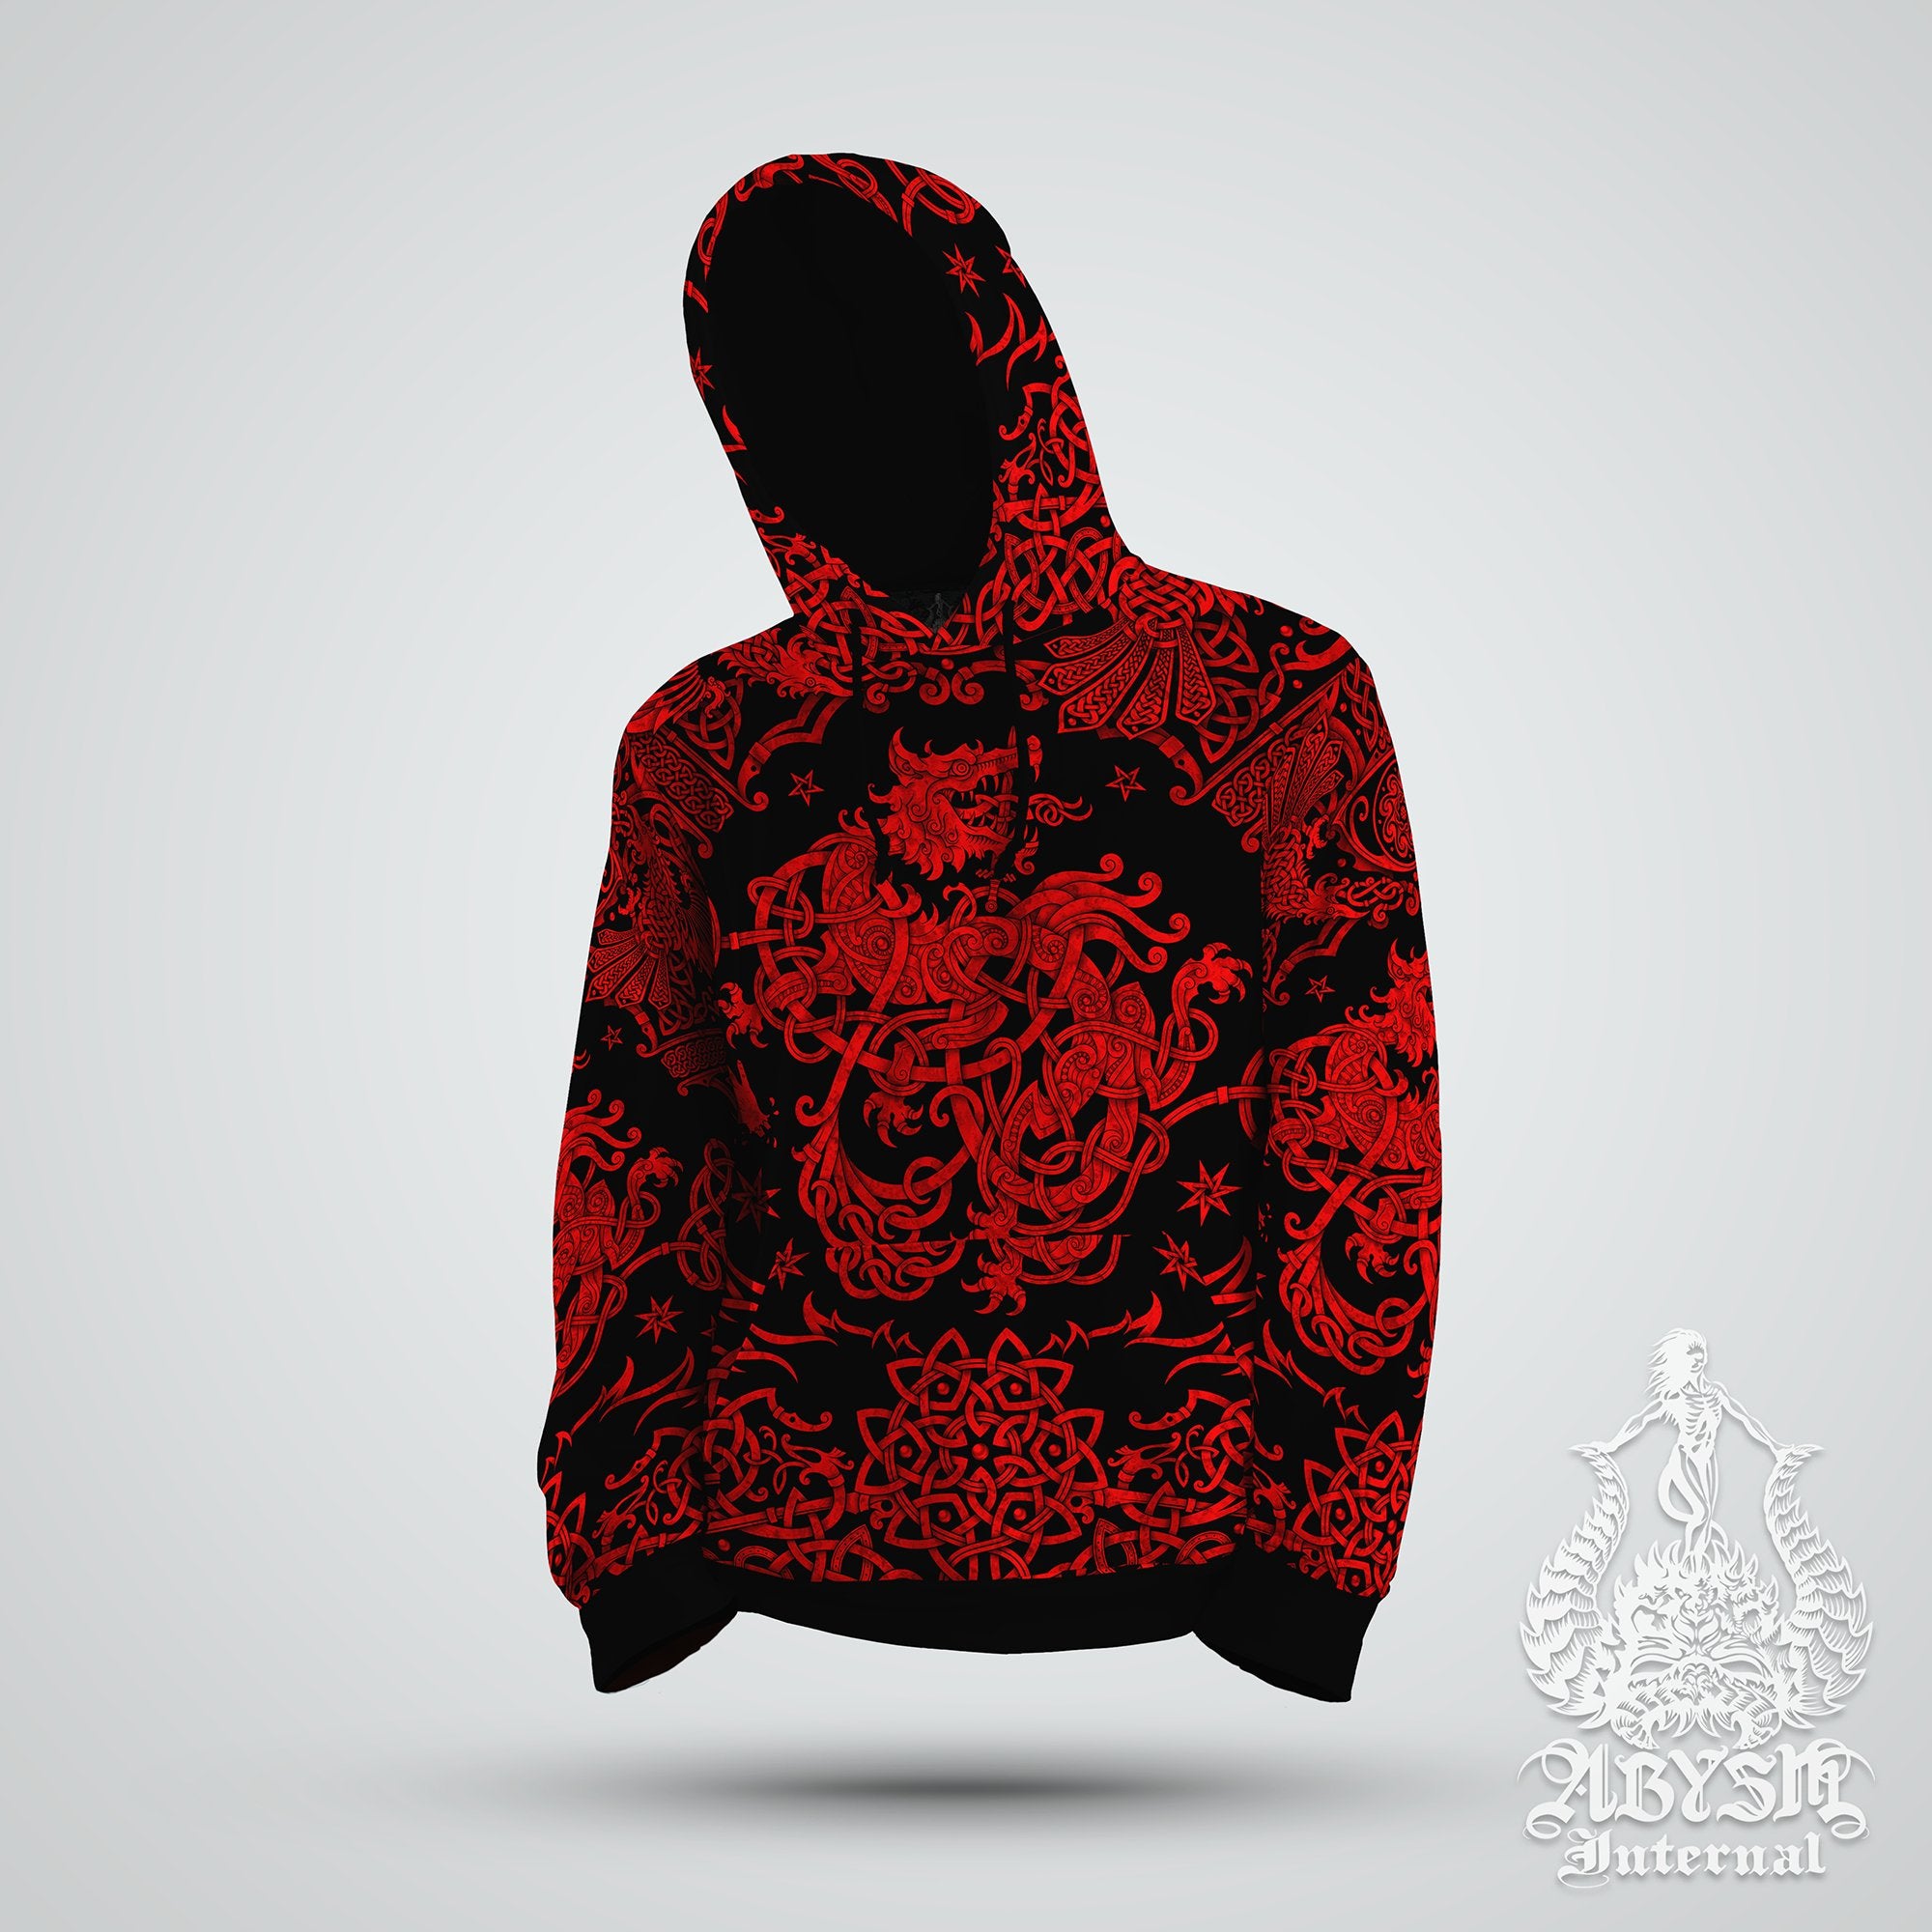 Norse Wolf Hoodie, Fenrir Sweater, Knotwork Pullover, Viking Street Outfit, Nordic Art Streetwear, Alternative Clothing, Unisex - Black Red - Abysm Internal